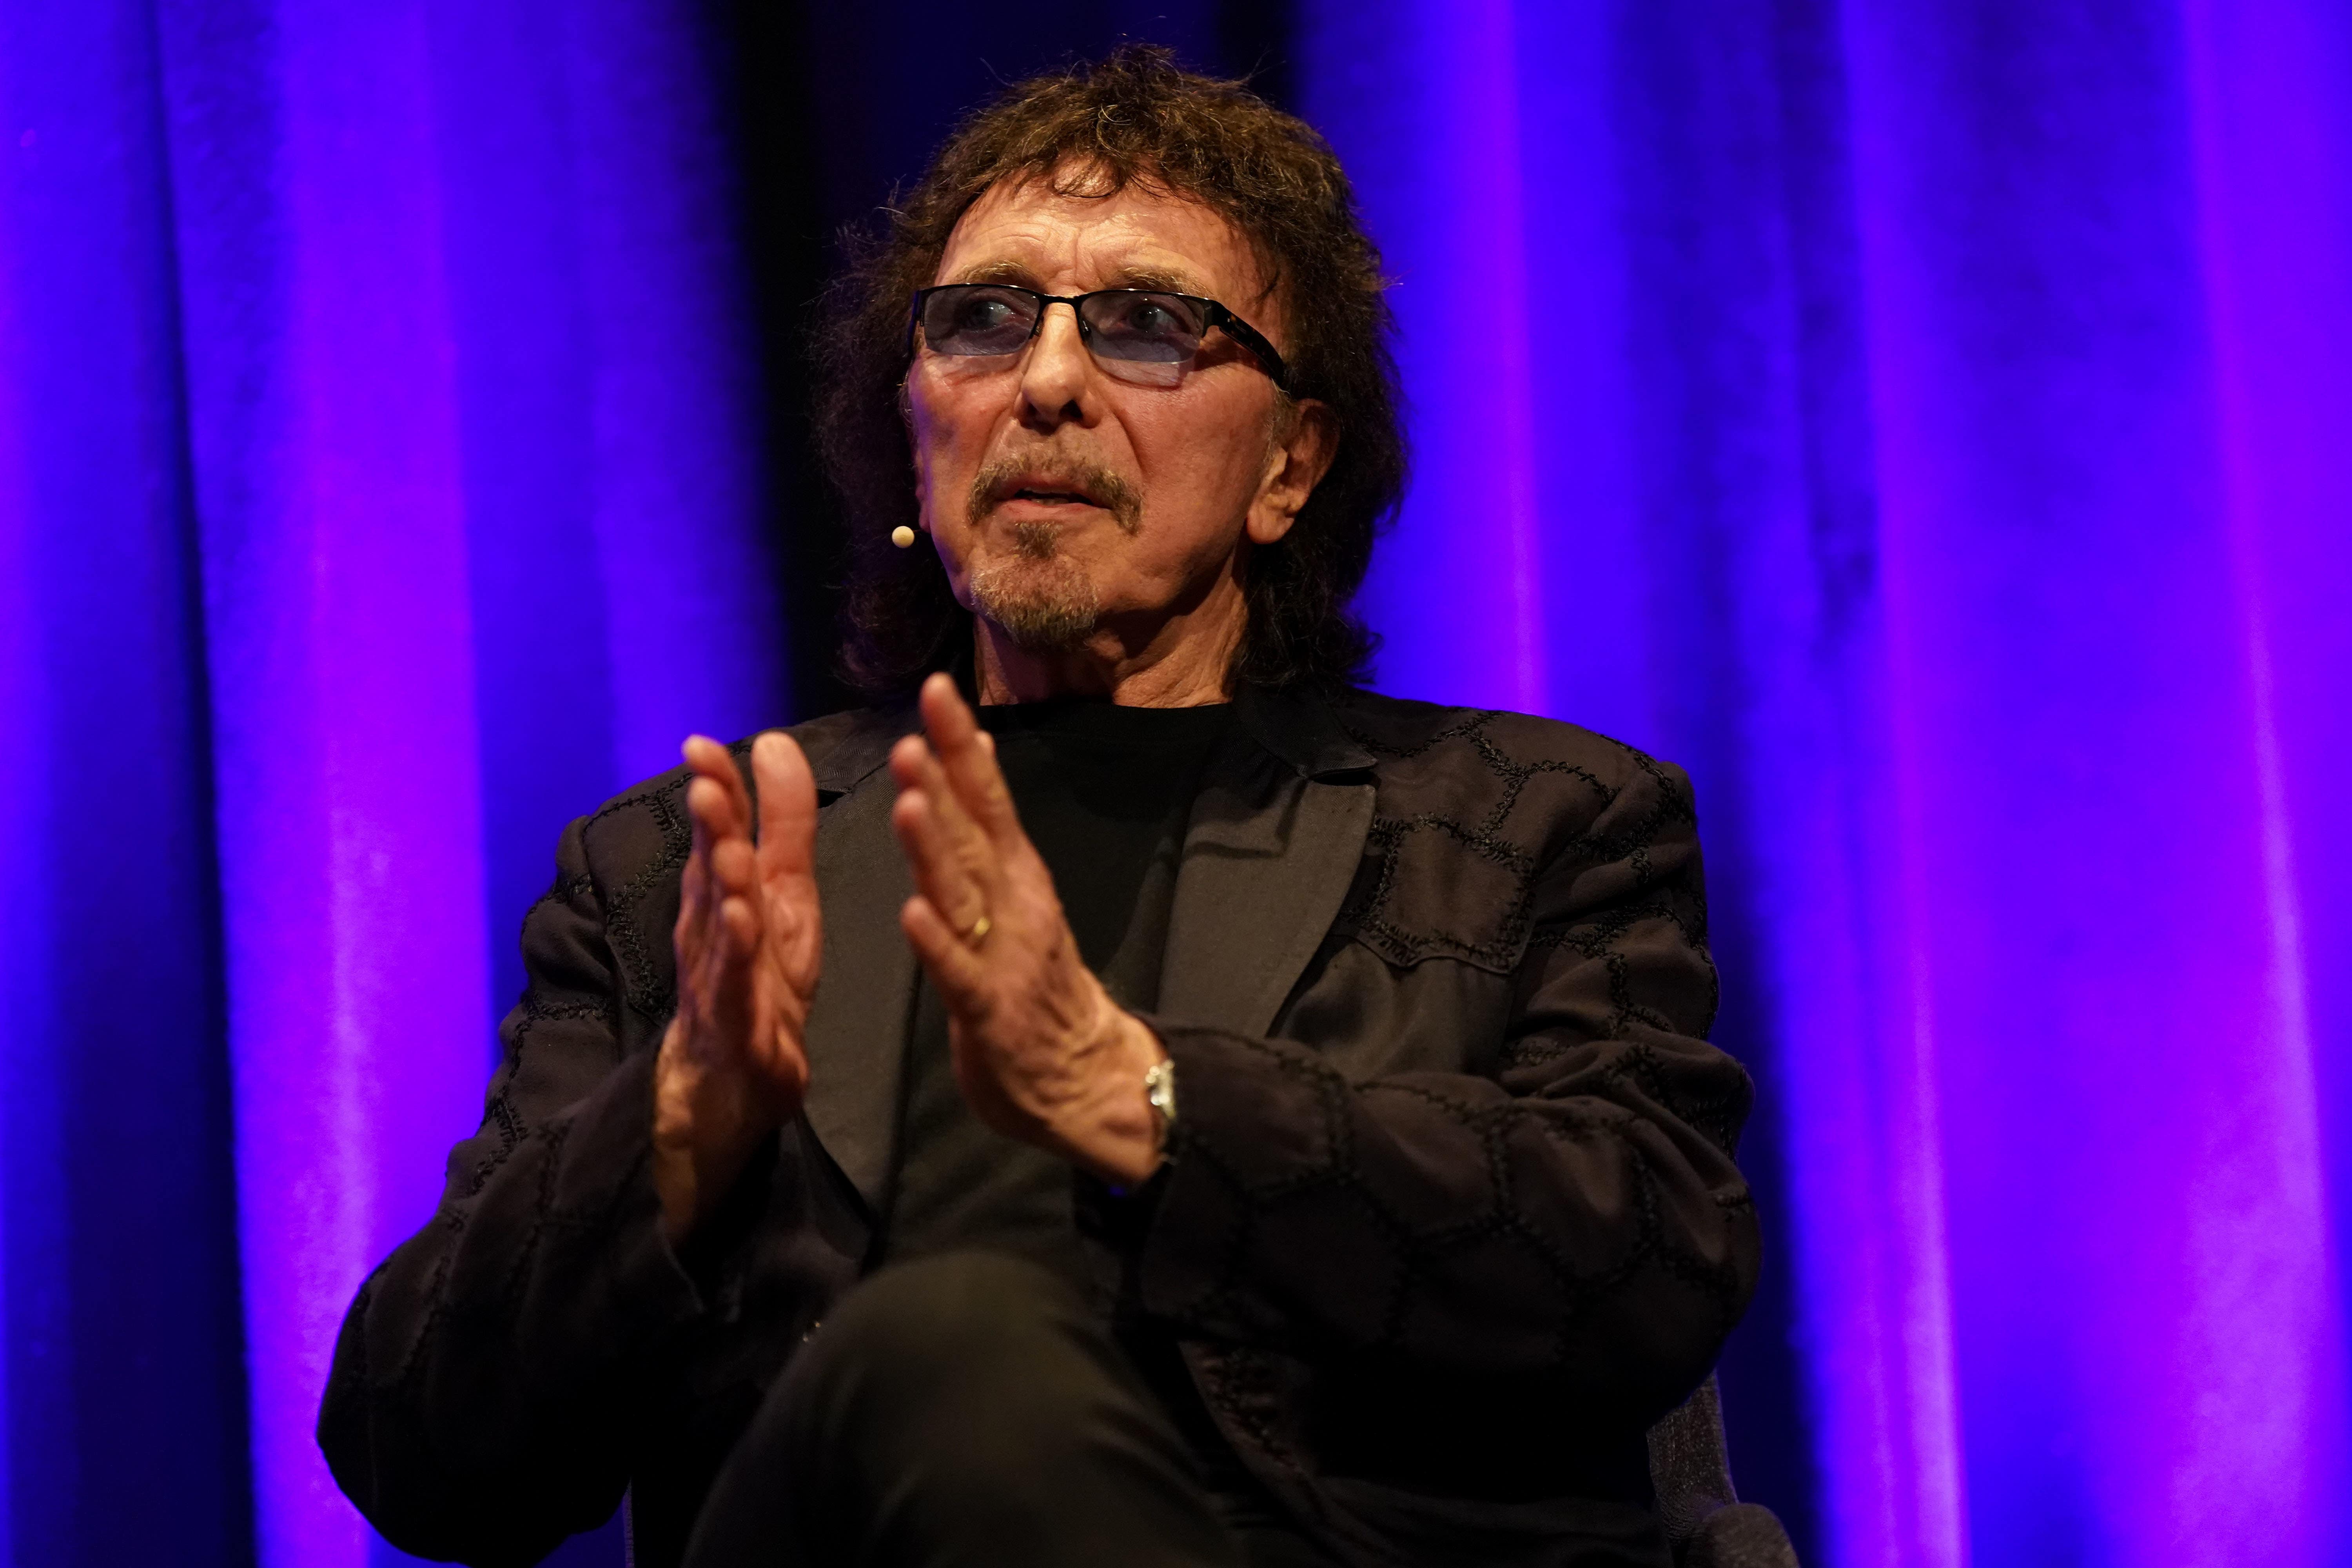 Tony Iommi attends Birmingham launch event for Black Sabbath – The Ballet (Jacob King/PA)